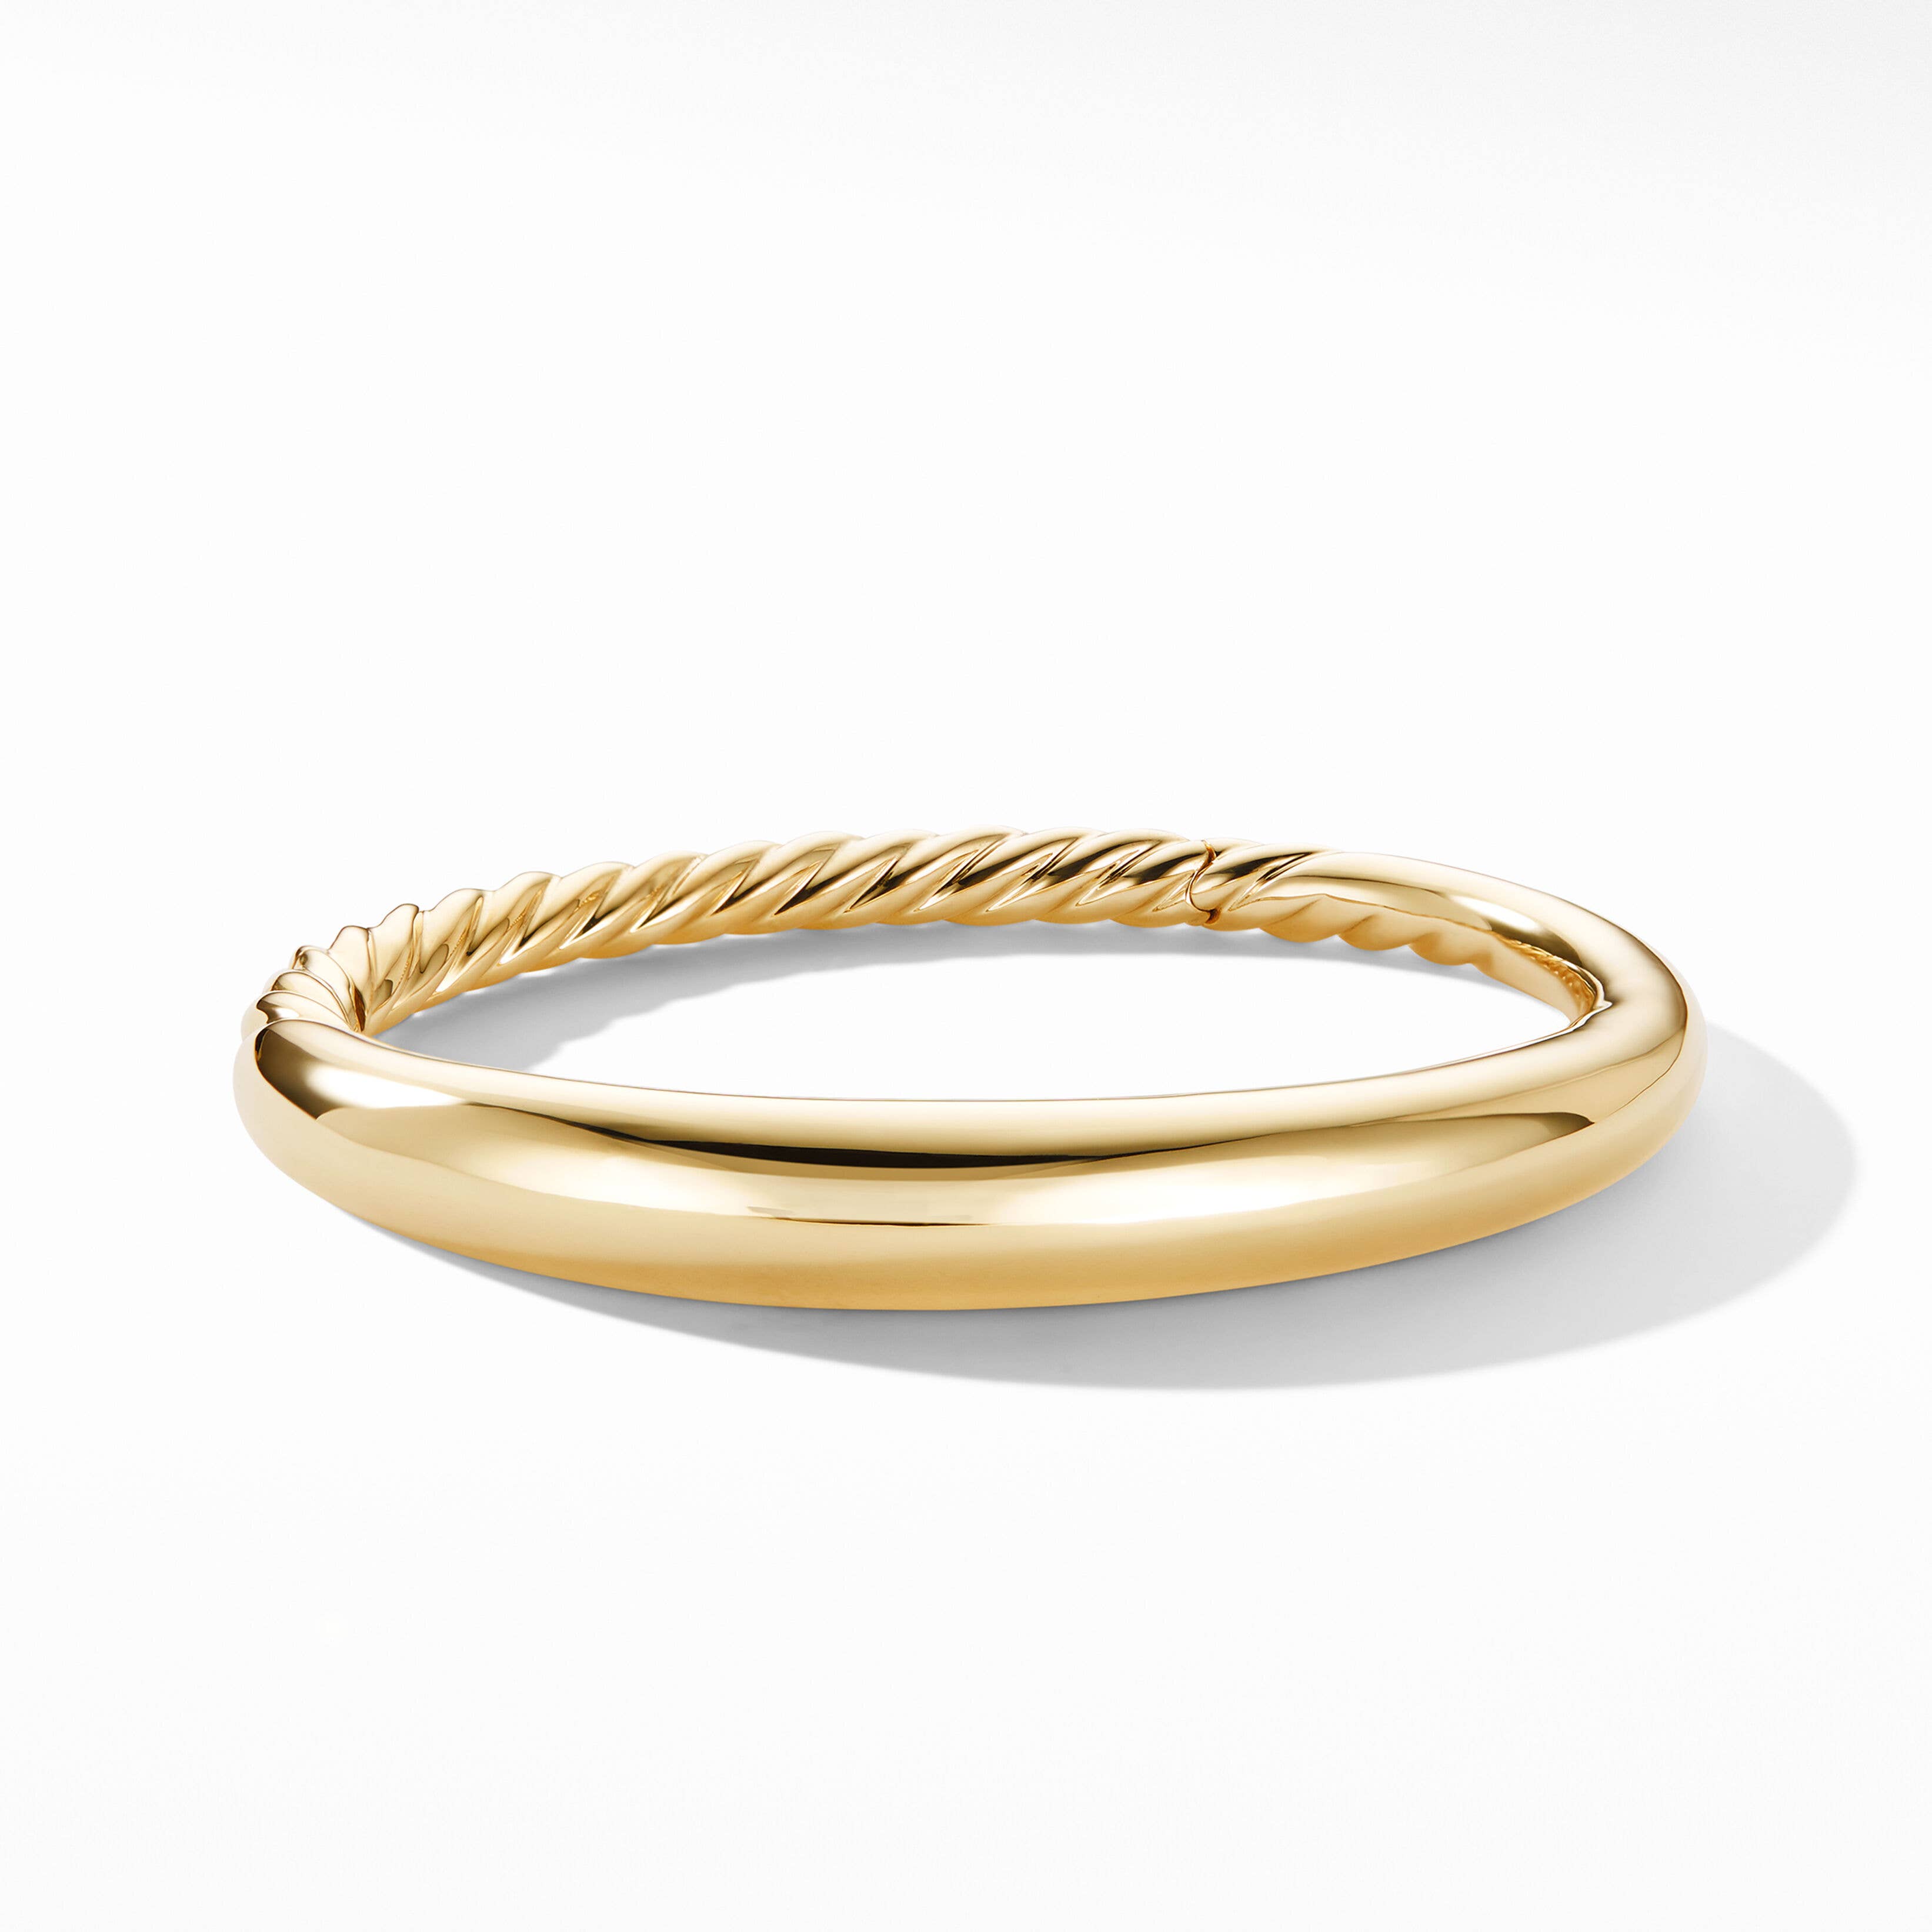 Pure Form® Smooth Bracelet in 18K Gold, 9.5mm